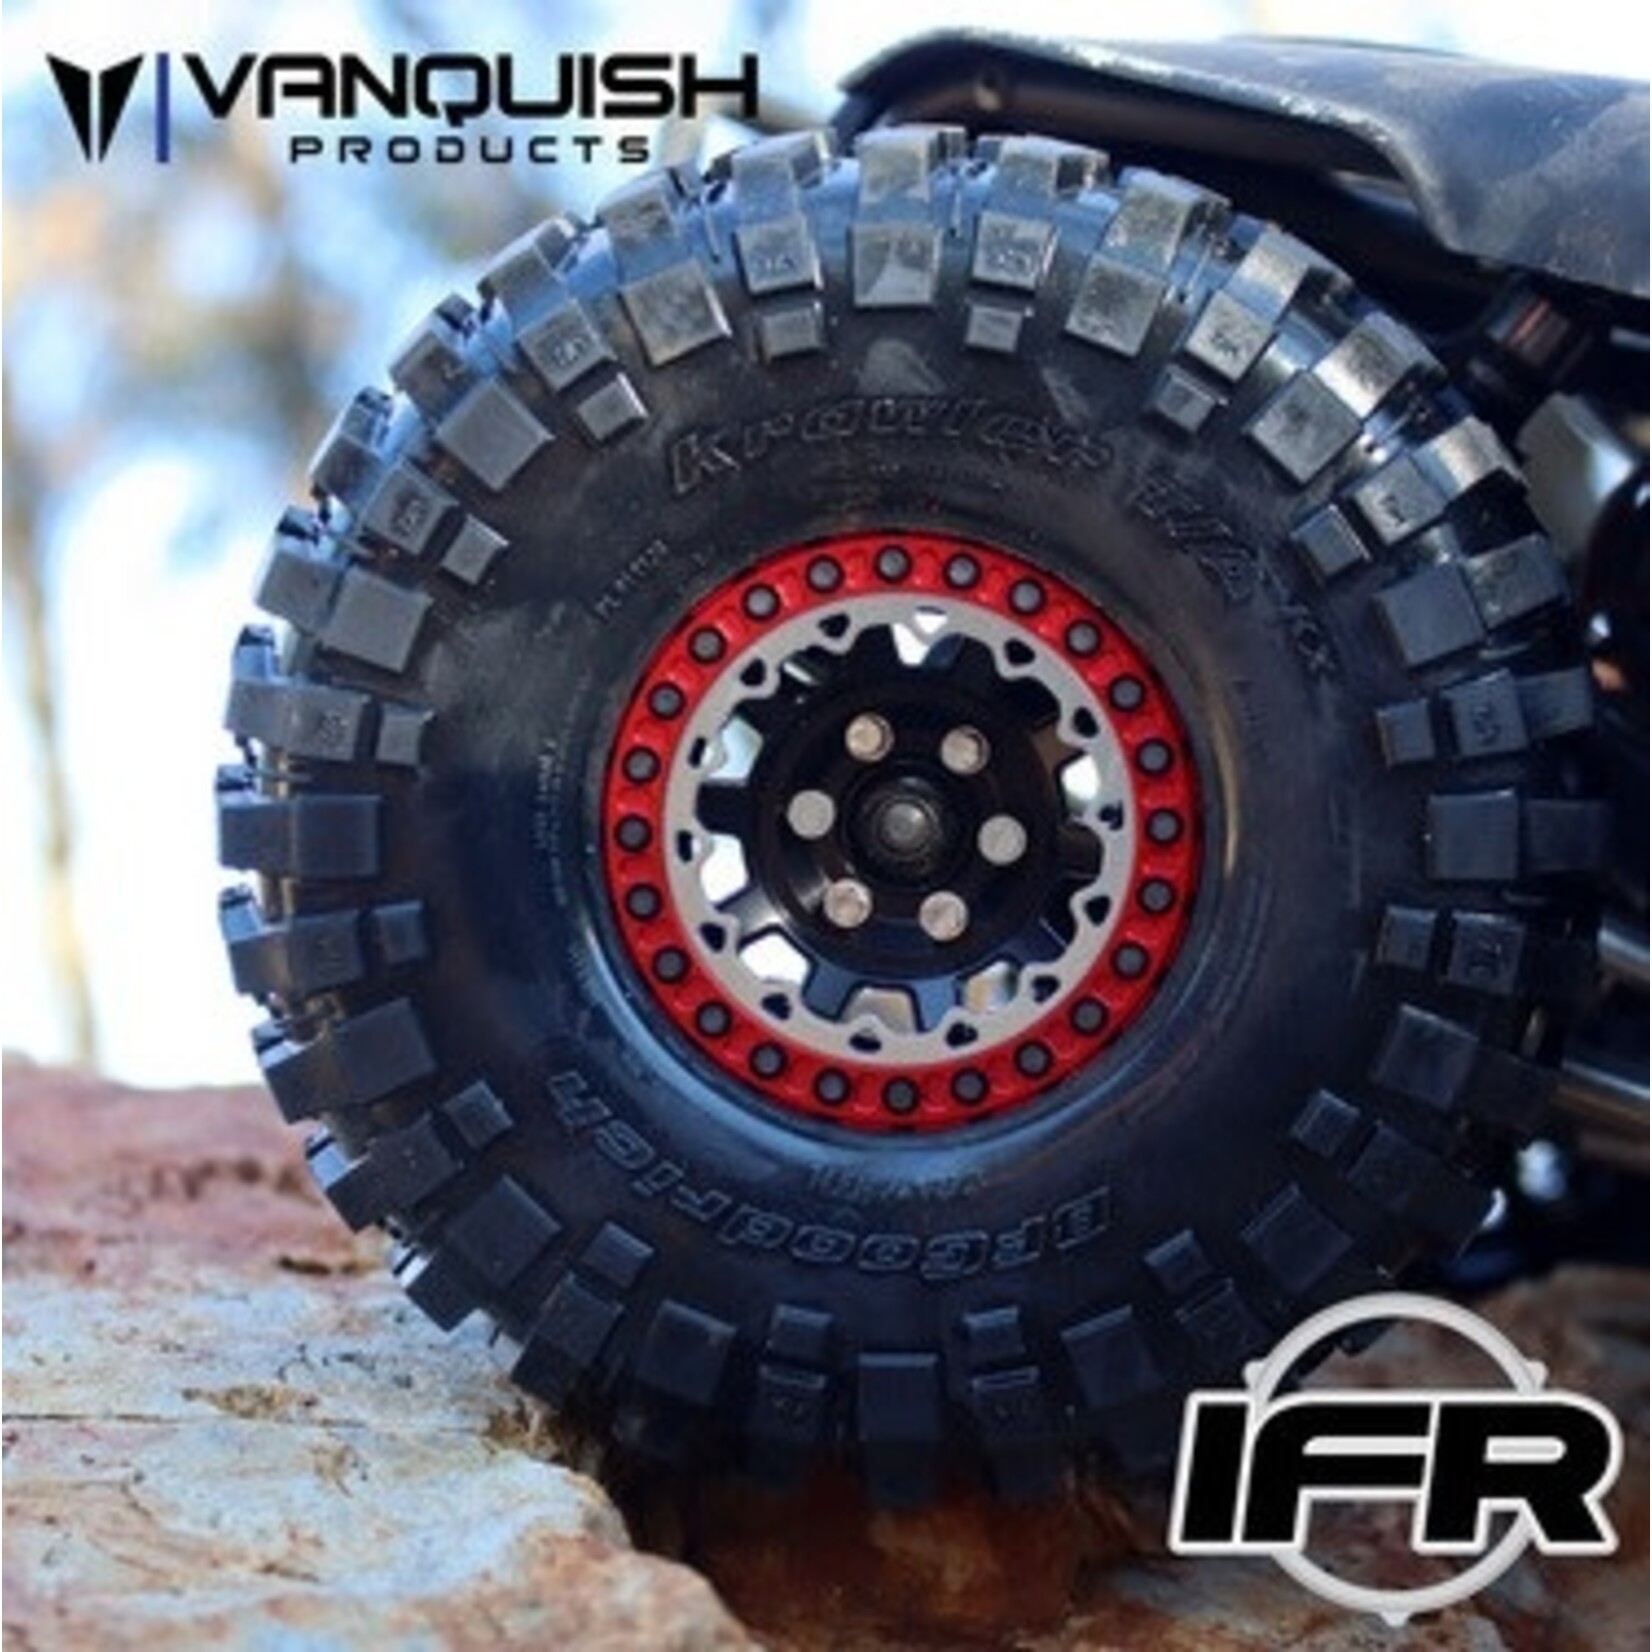 Vanquish Products Vanquish Products 1.9" IFR Original Beadlock Ring (Blue) #VPS05404